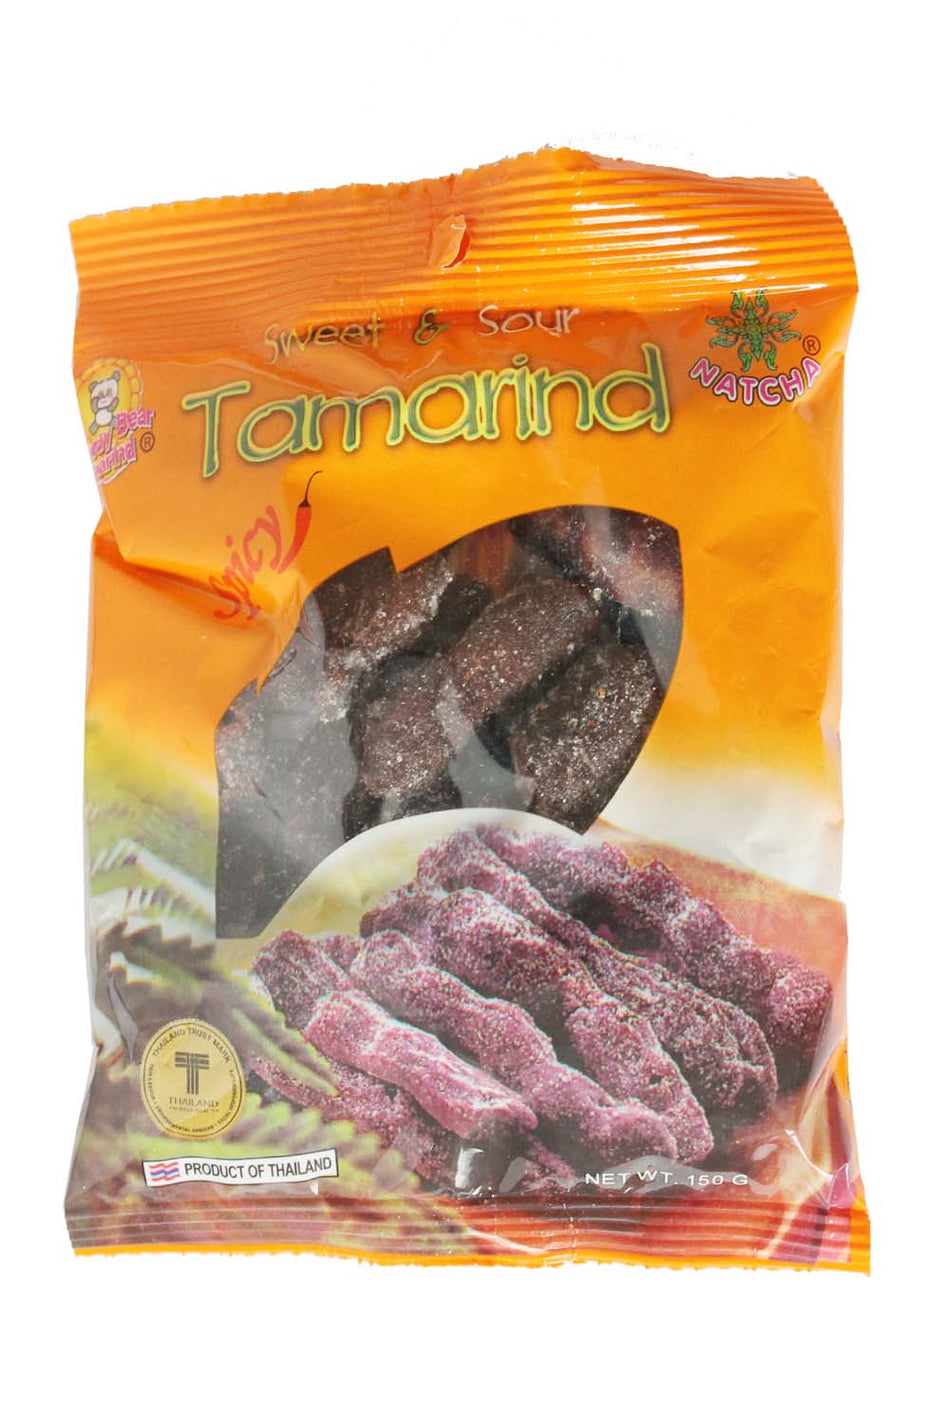 Natha Spicy Sweet & Sour Tamarind